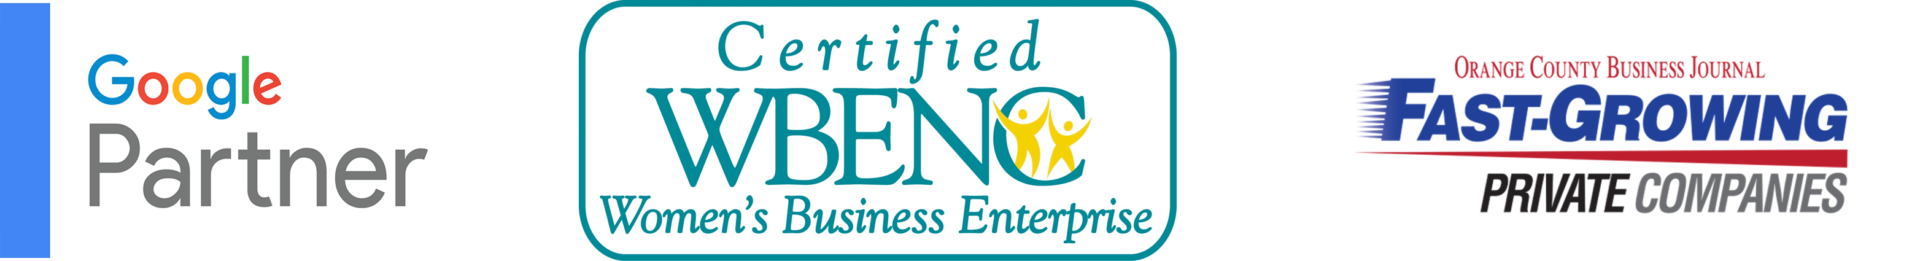 google partner certified, certified women's business enterprise, orange county business journal fast-growing private companies